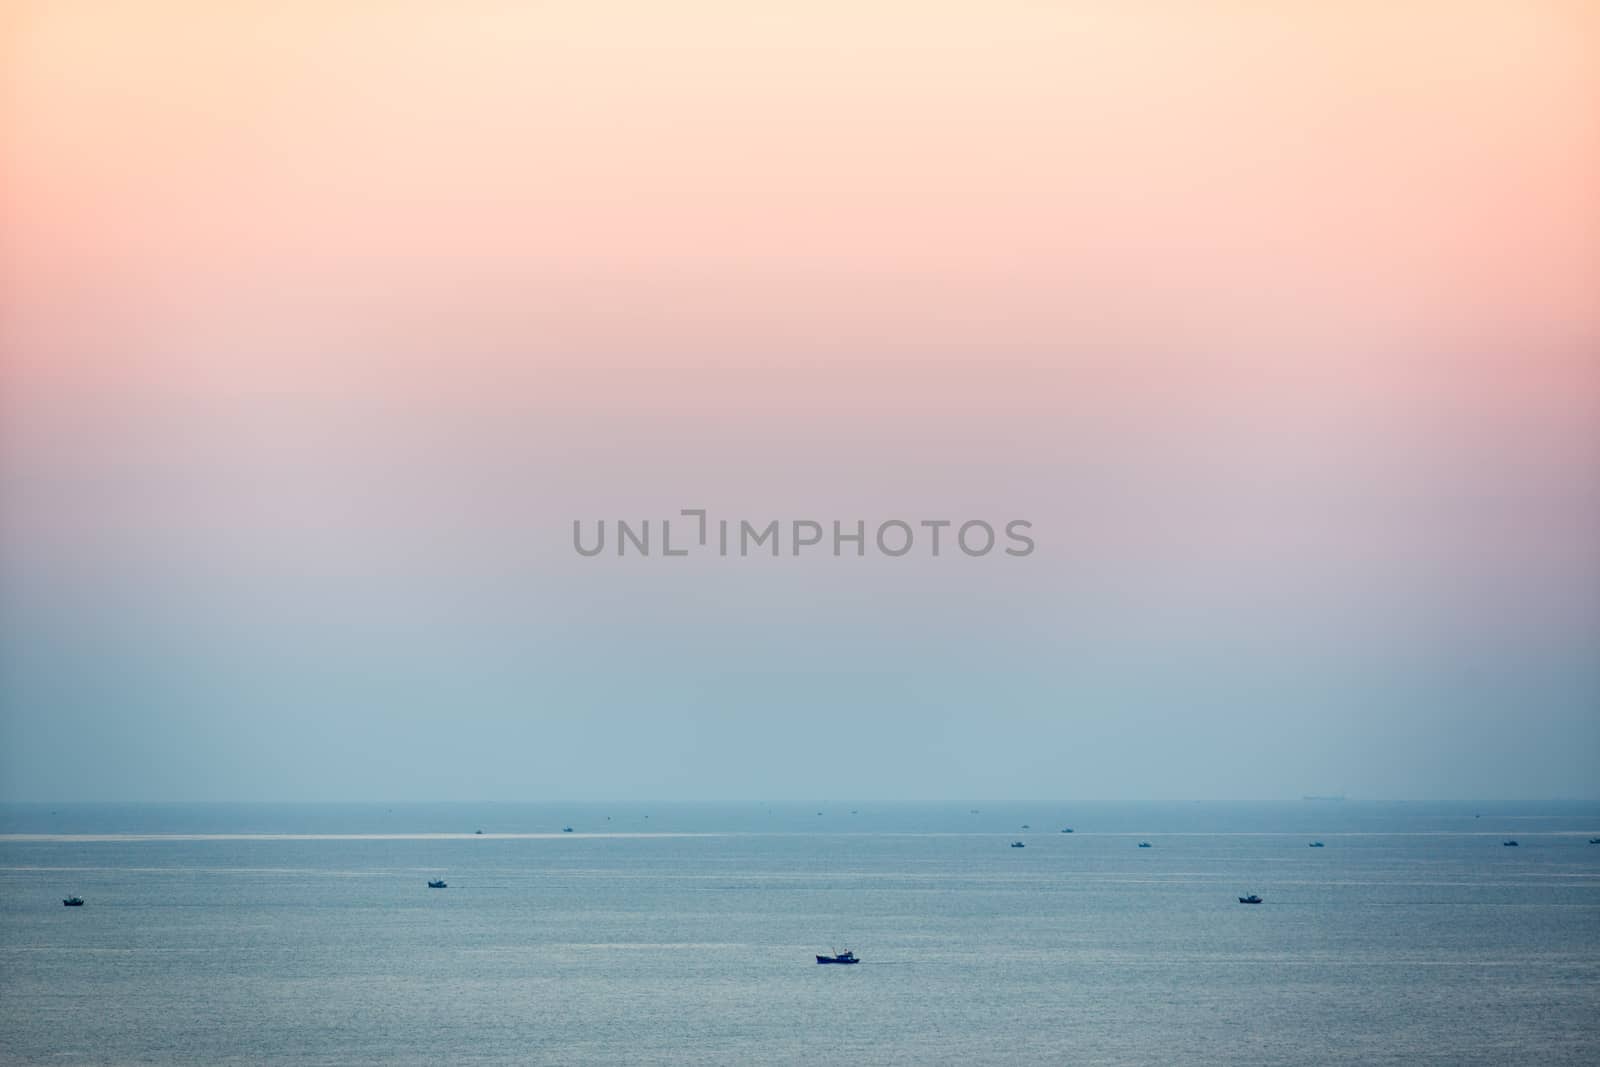 Small fishing boats in South China Sea at dusk, Mui Ne, Vietnam by fisfra